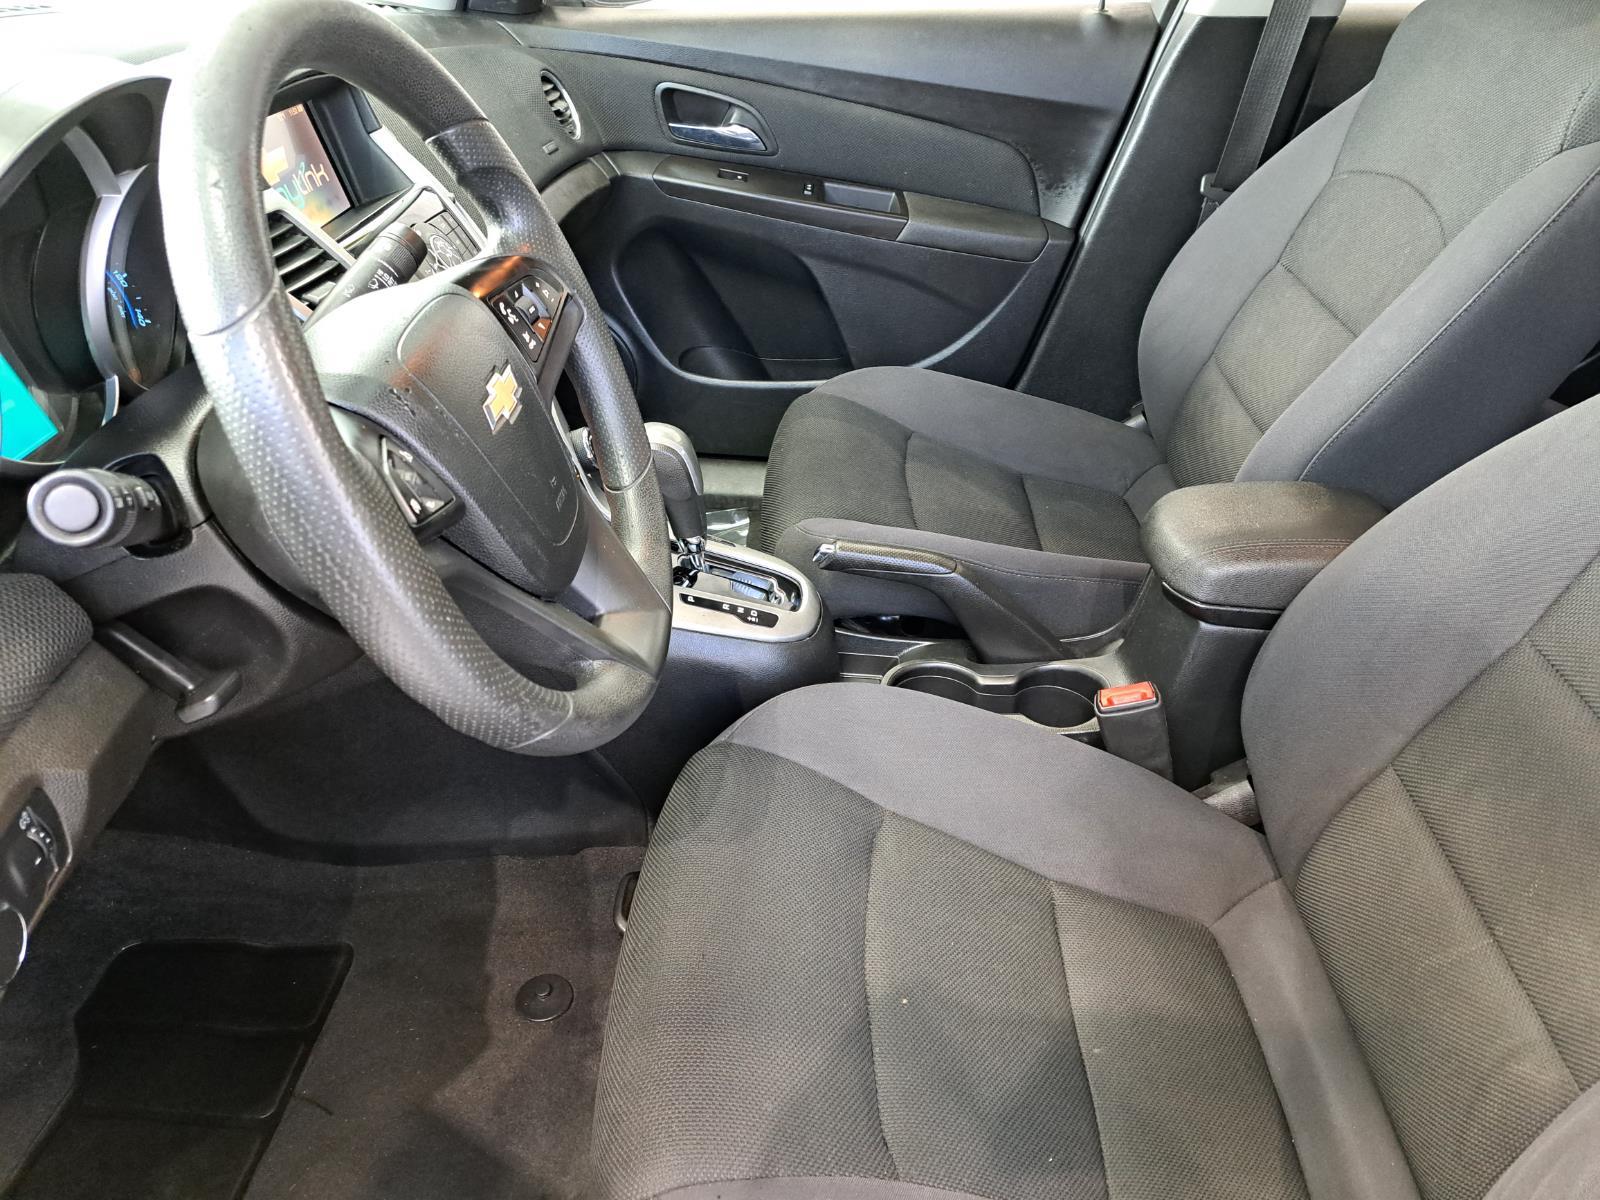 2015 Chevrolet Cruze LT Sedan 4 Dr. Front Wheel Drive 26